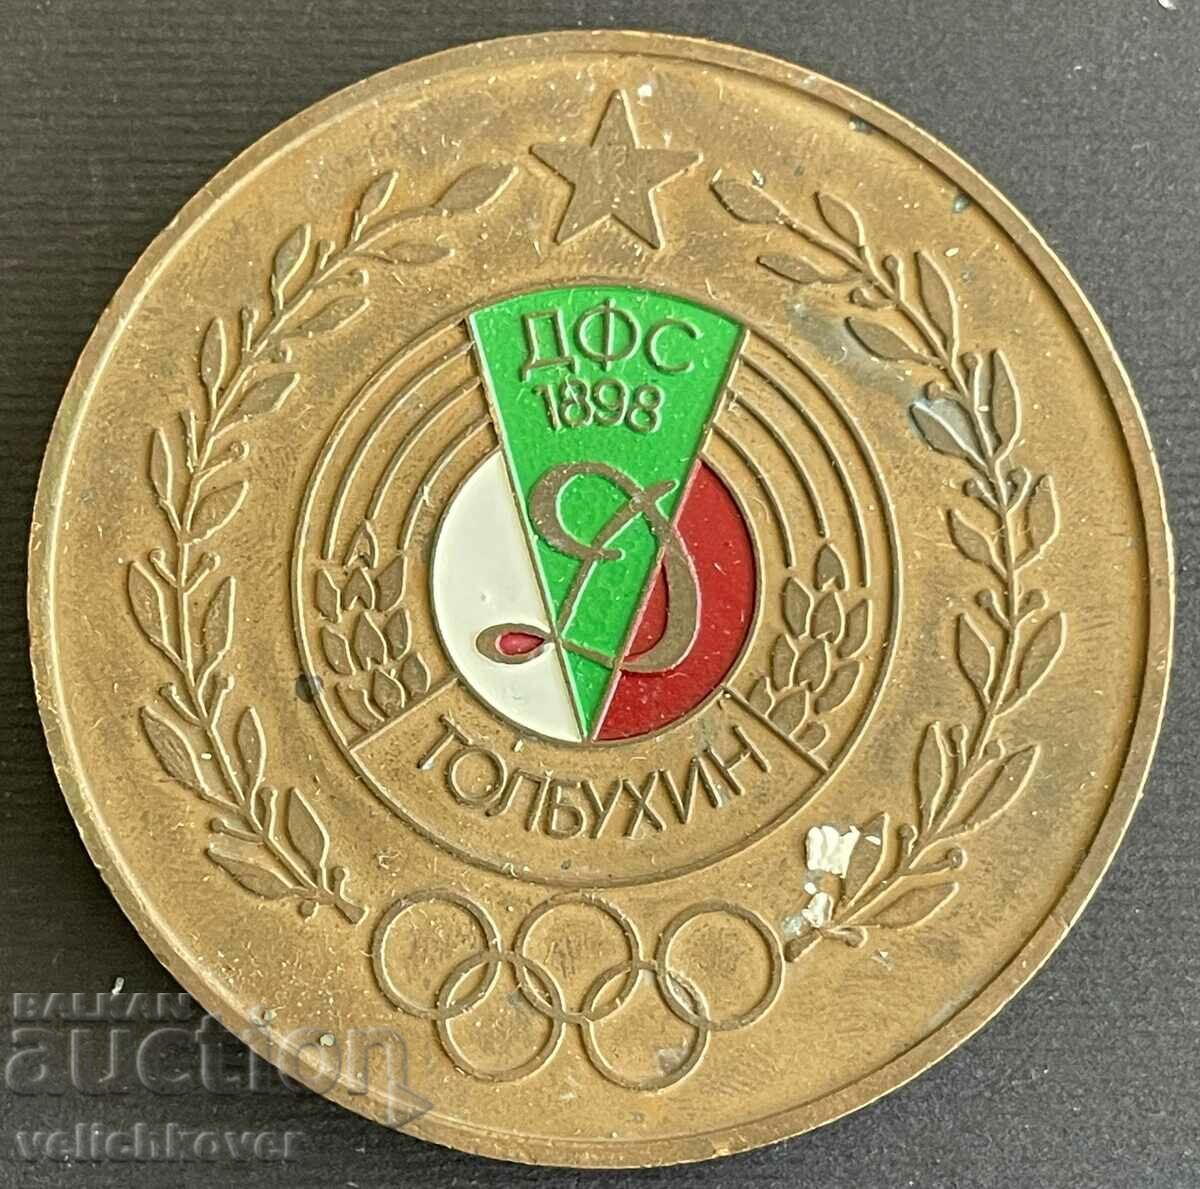 35358 България плакет ДФС футболен клуб  Добруджа Толбухин